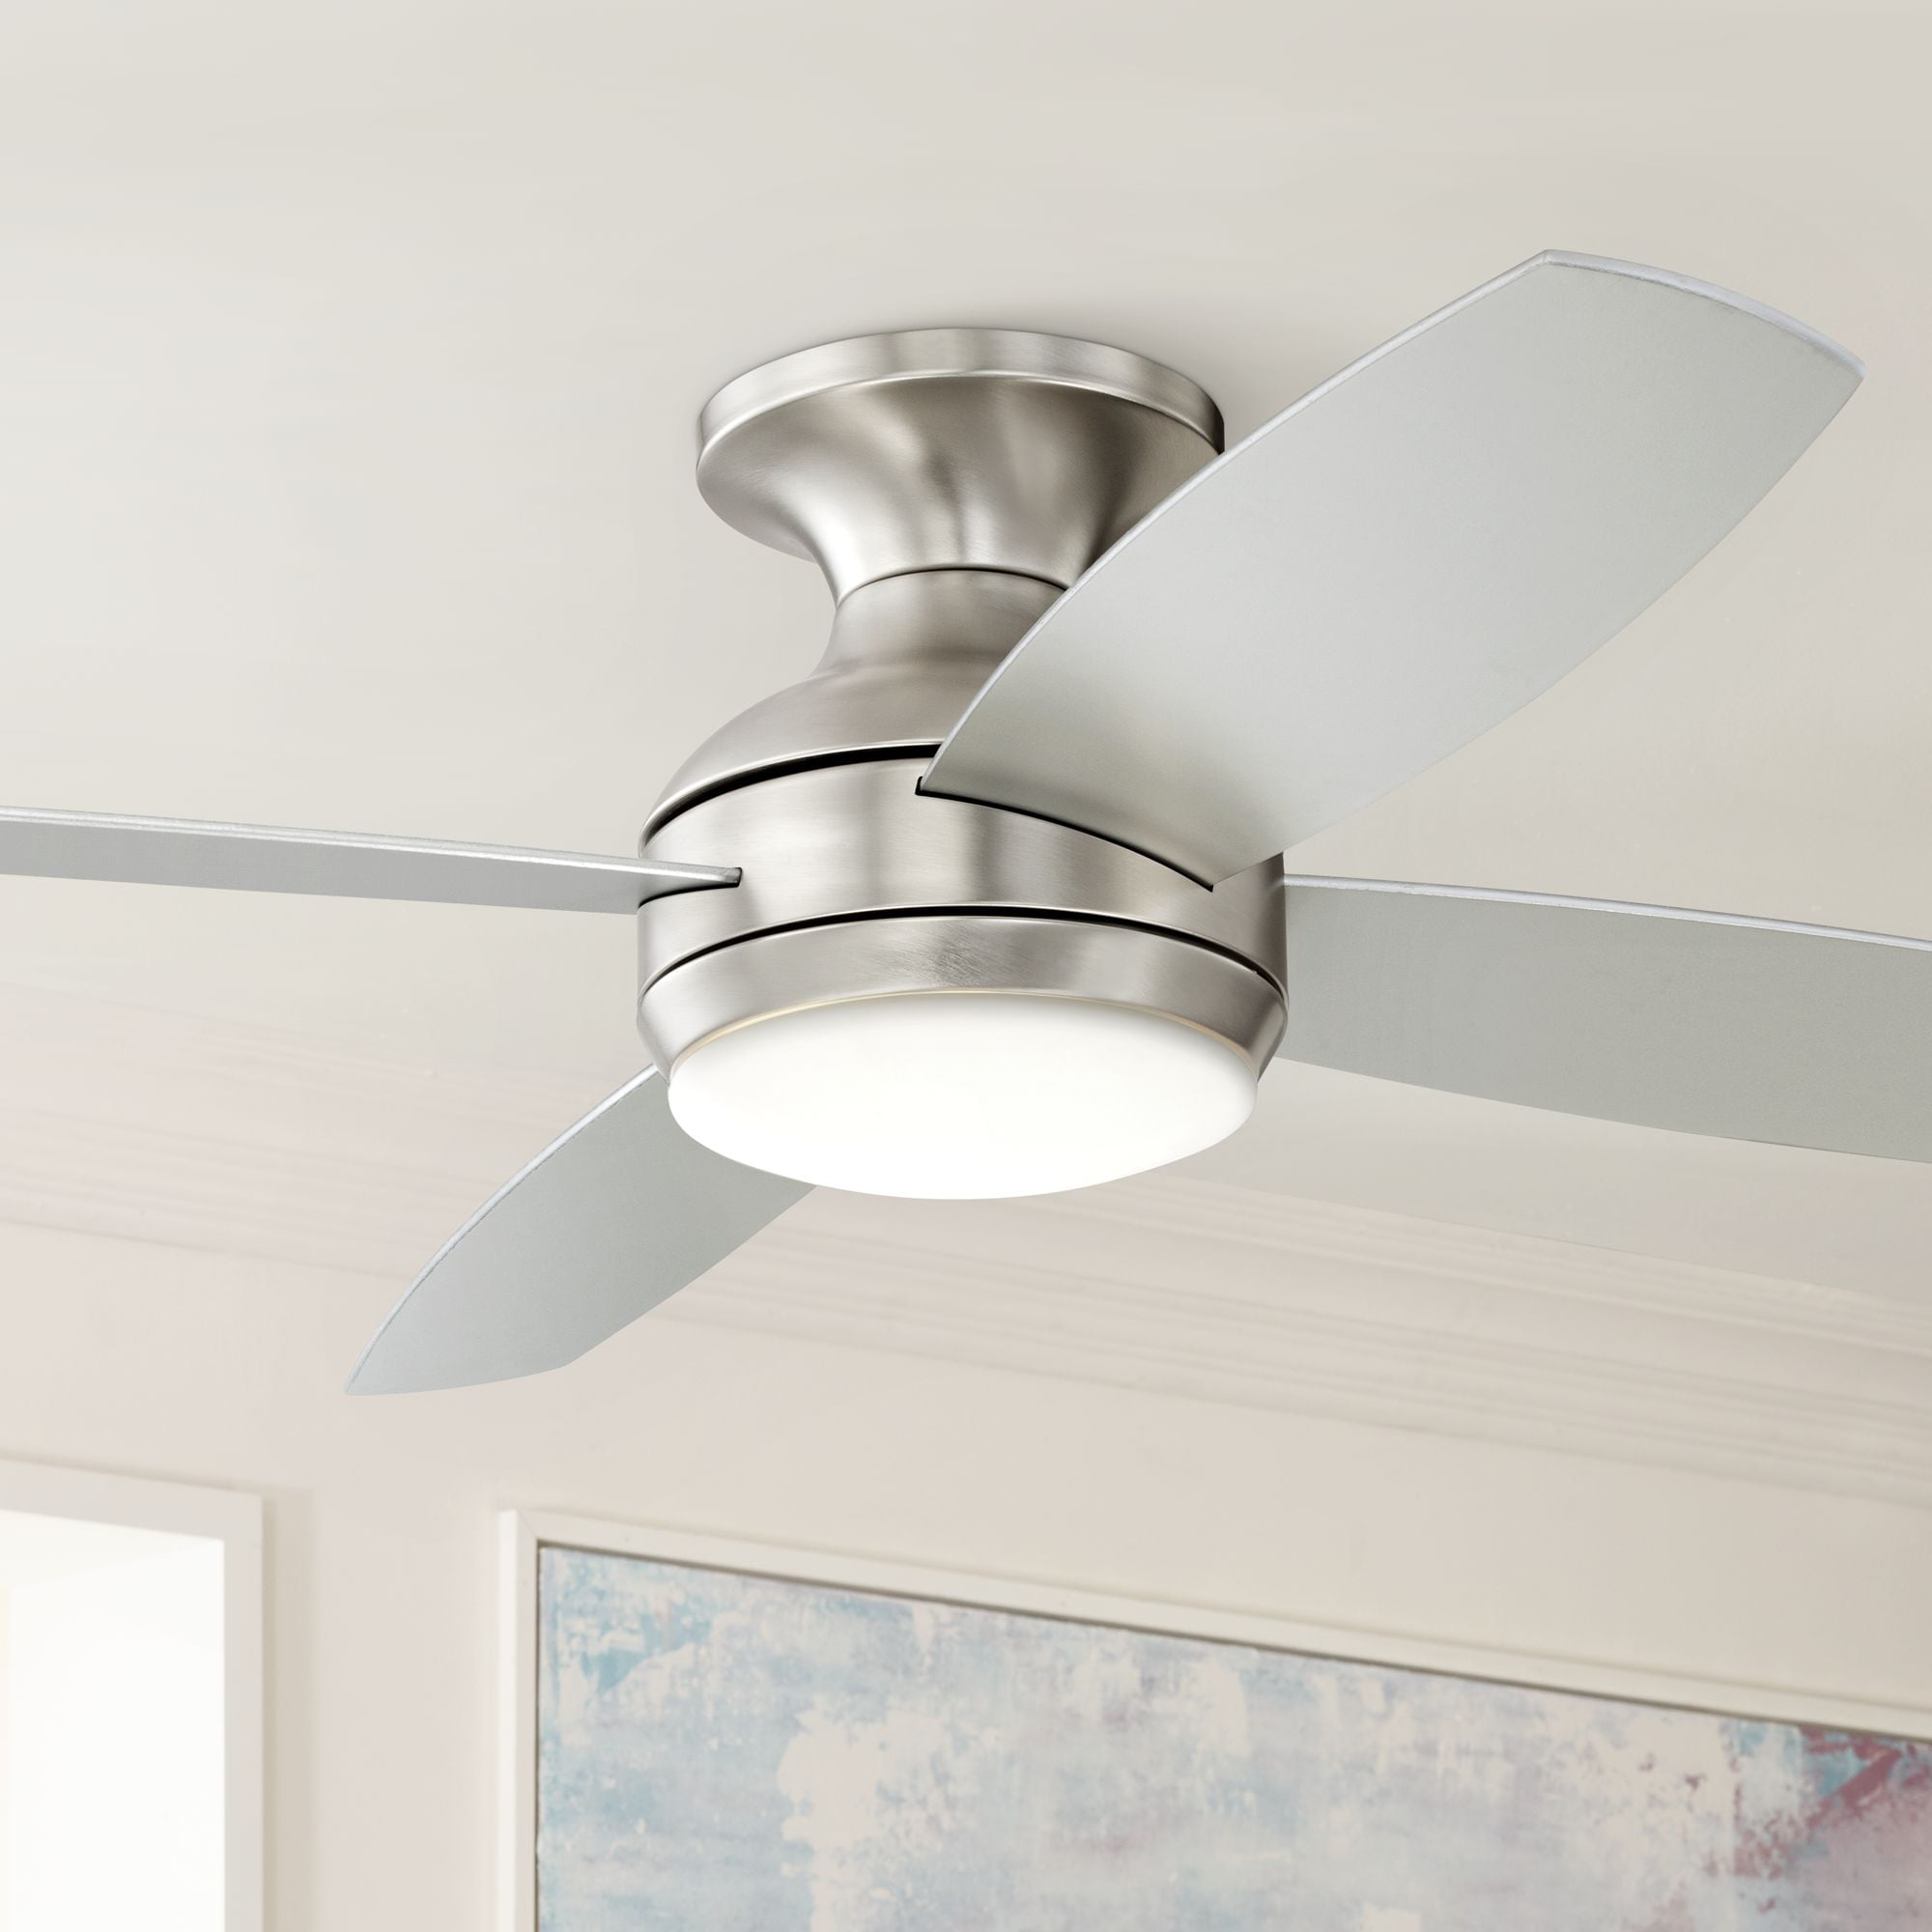 Details about   Ceiling Fan with Light Kit Hugger 52 in LED Indoor Flush Mount Brushed Nickel 